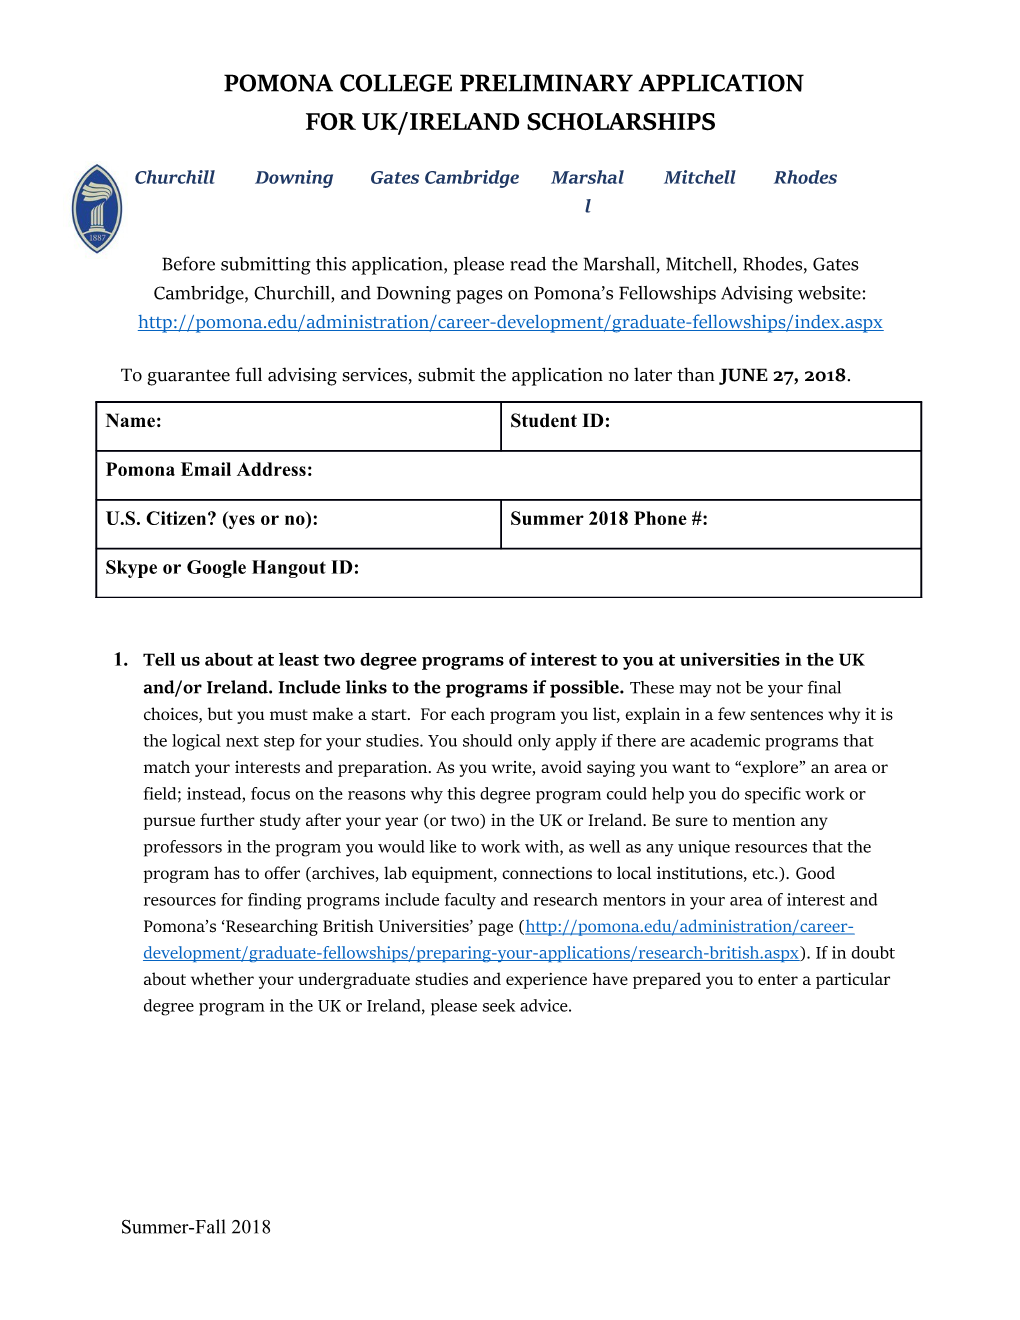 Pomona College Preliminary Application for Uk/Ireland Scholarships